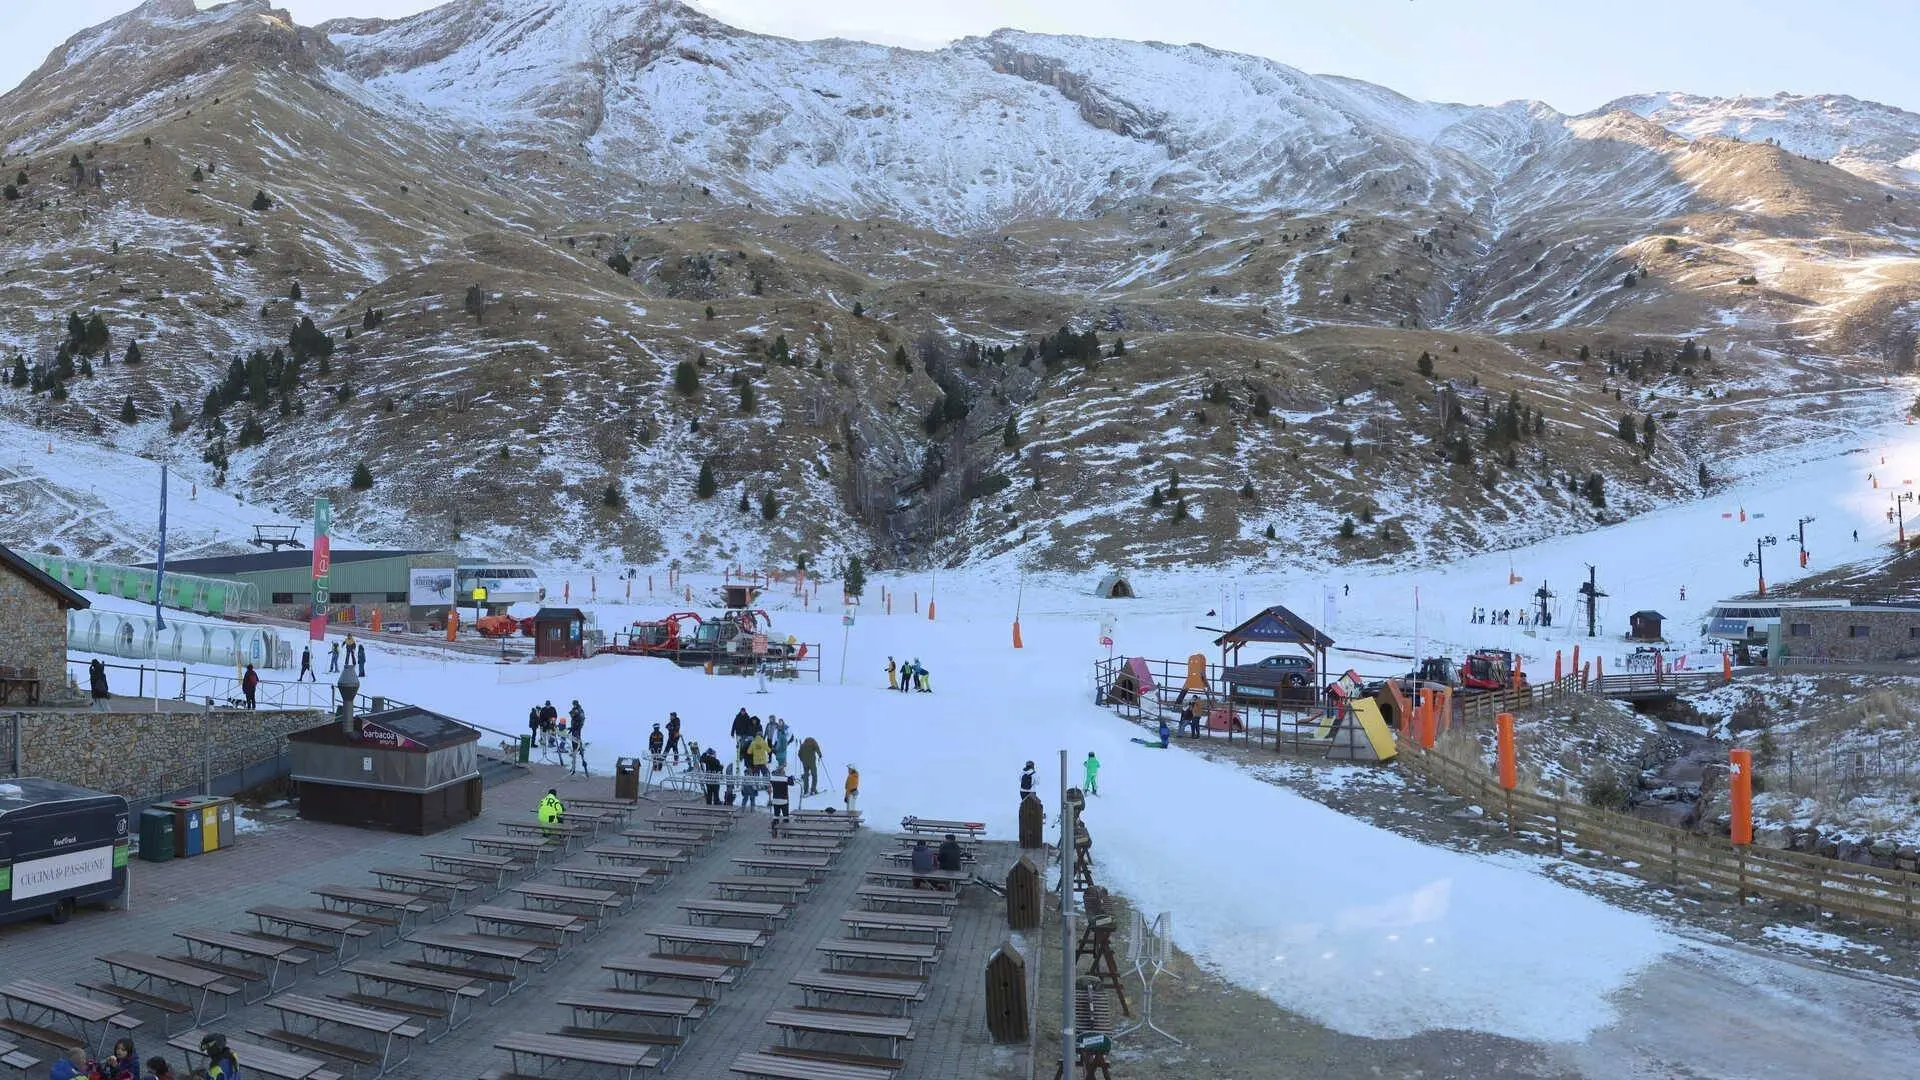 Paseo de mushing nieve en Cerler 15 minutos desde 22€ 